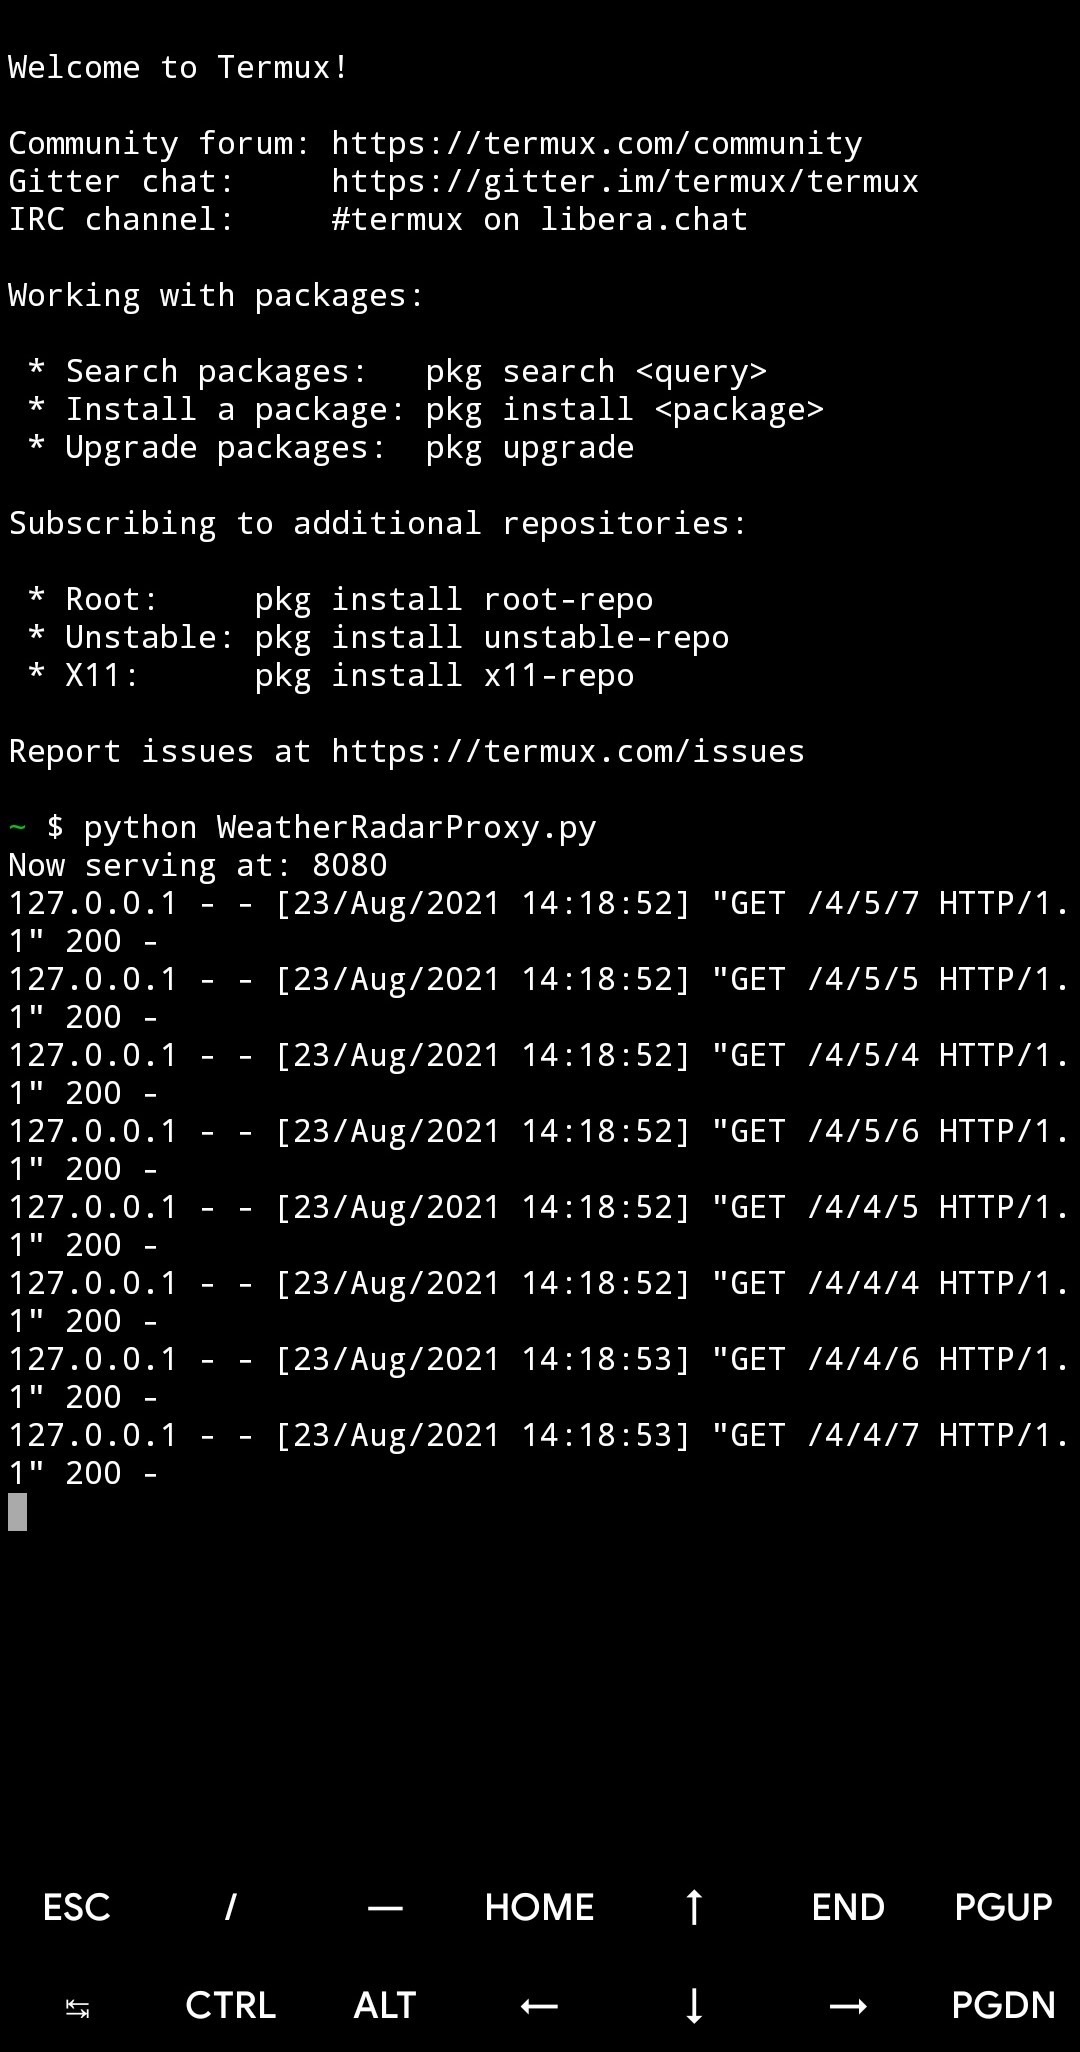 Screenshot from Termux Running the Proxy Server